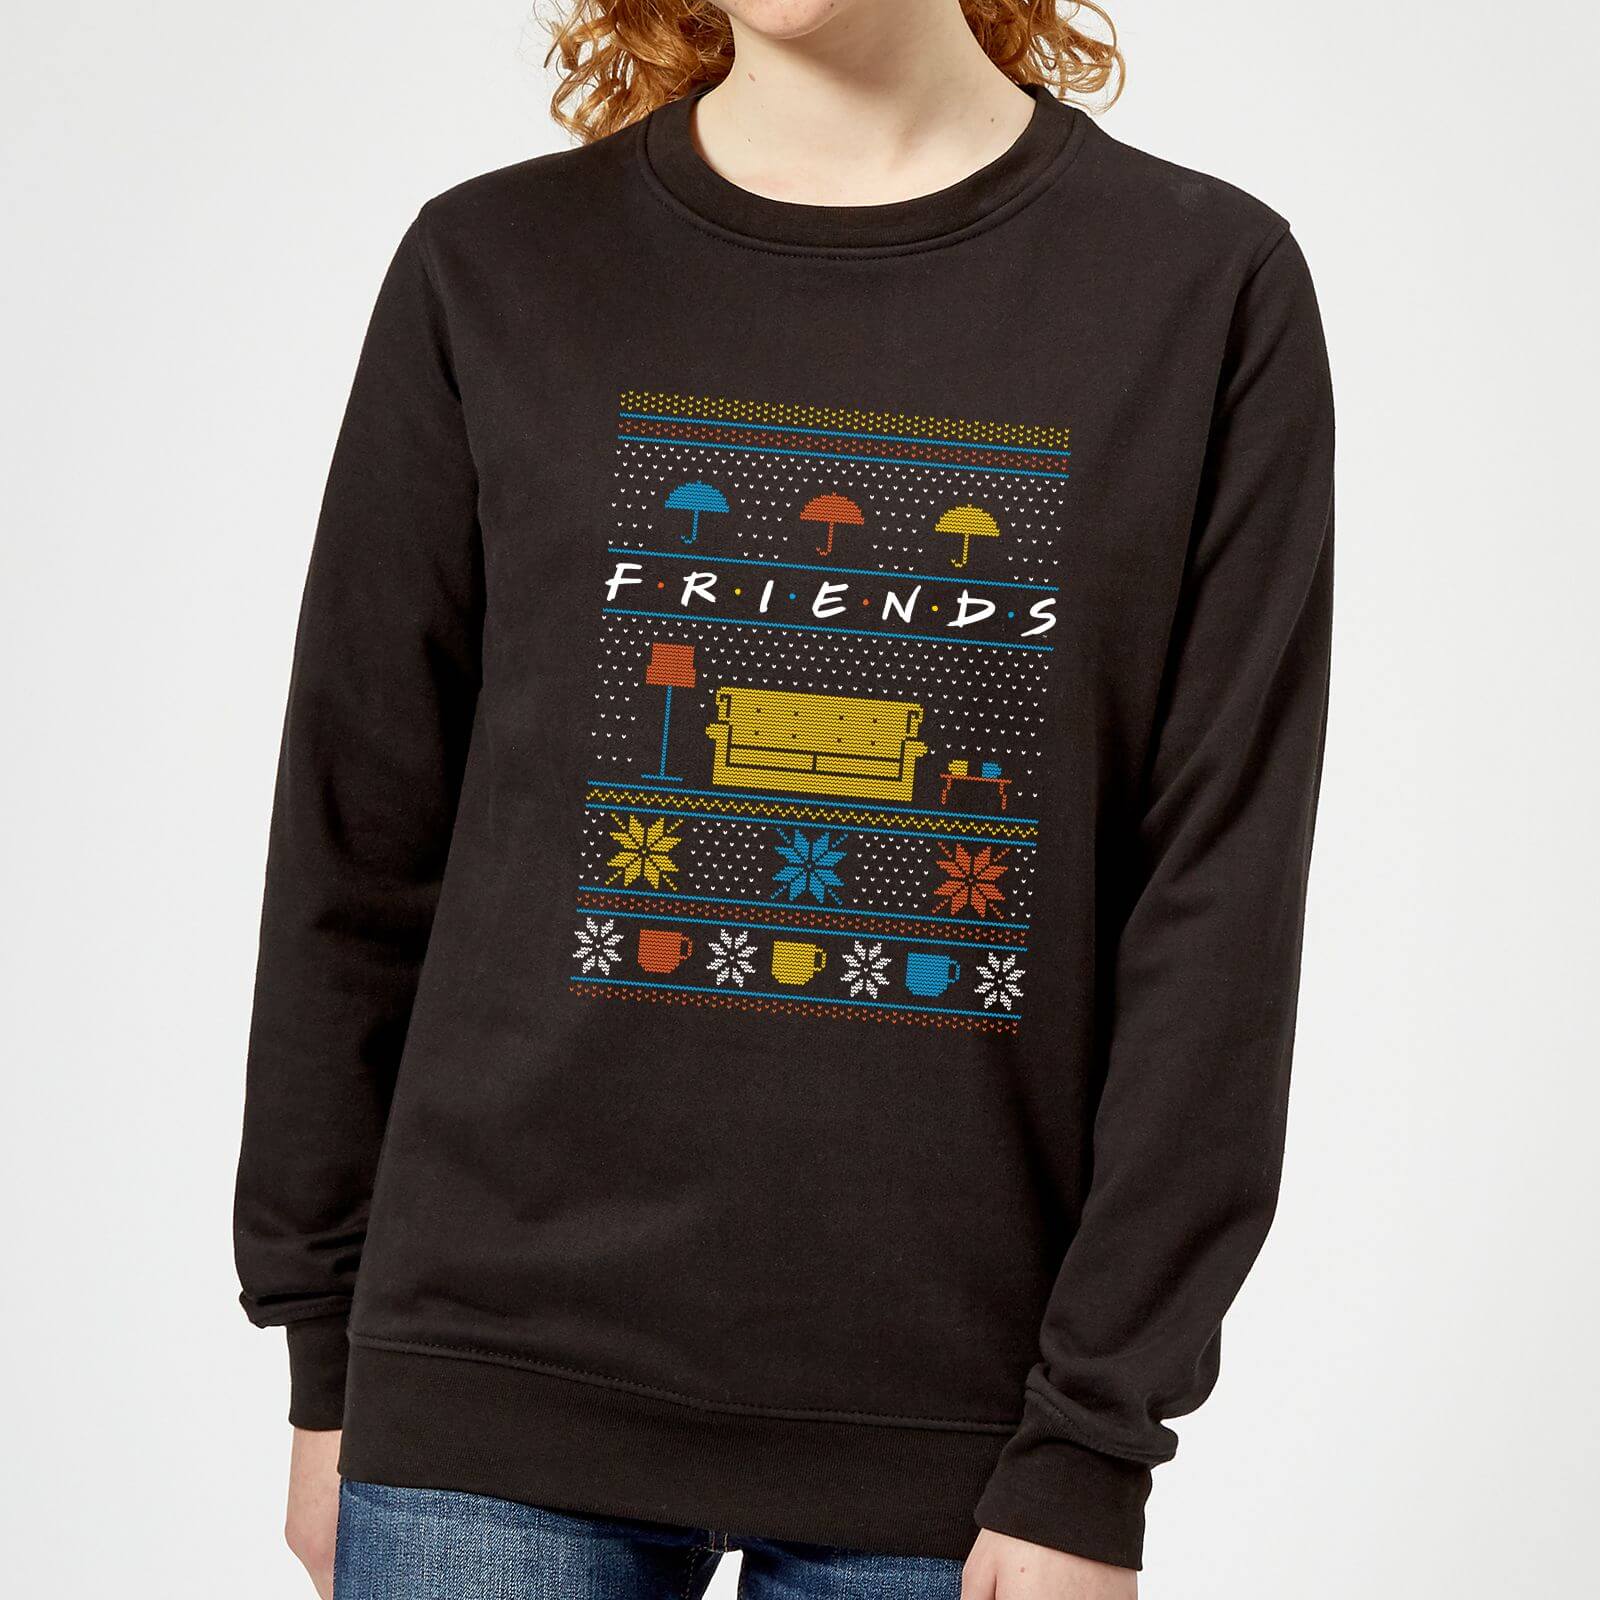 Friends Sofa Knit Women's Christmas Sweater - Black - M